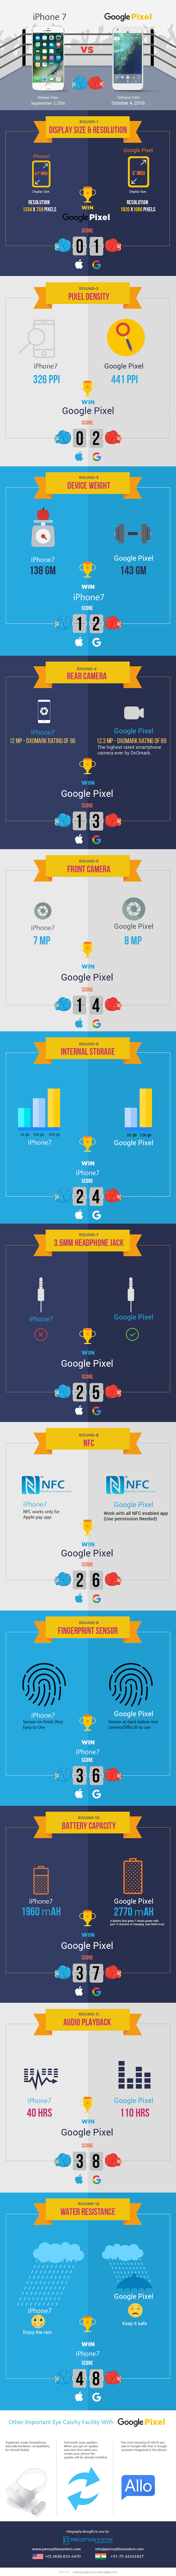 Google Pixel VS Apple iPhone 7 infographic